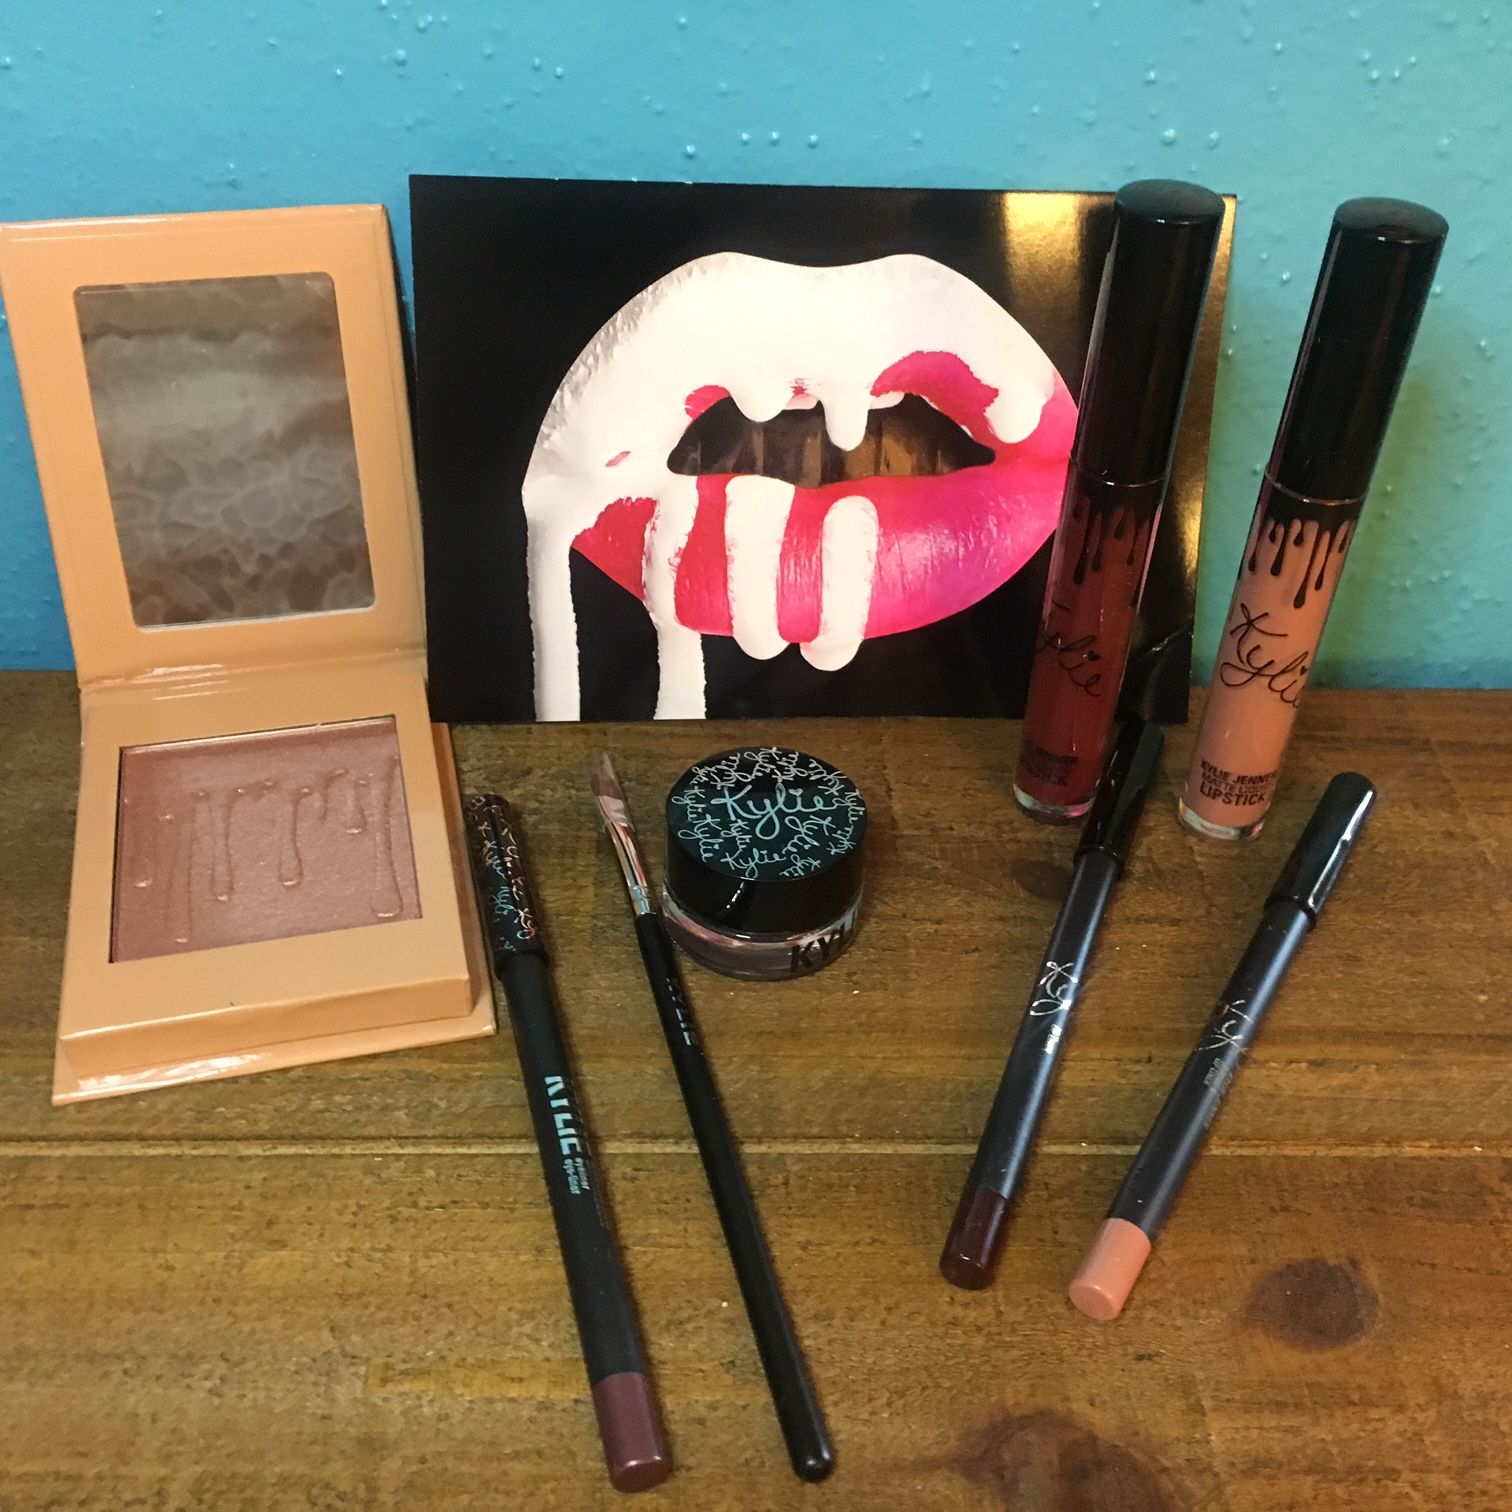 Kylie Cosmetics - Beauty Insider Community